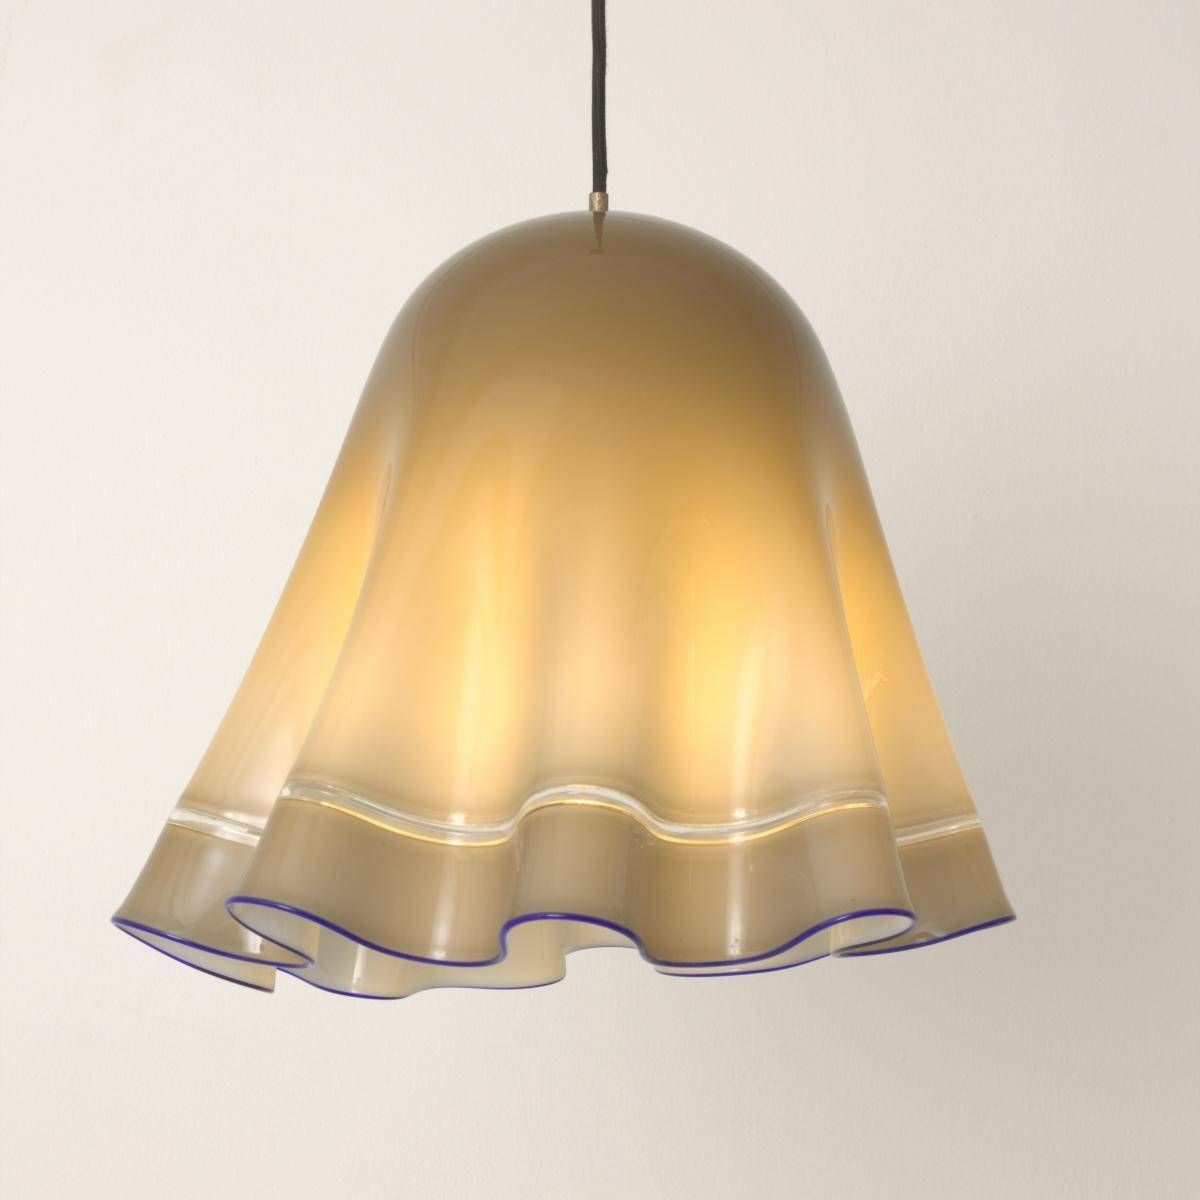 Vintage Grey & Blue Murano Glass Pendant Lamp For Sale At Pamono Inside Murano Glass Lighting Pendants (Photo 13 of 15)